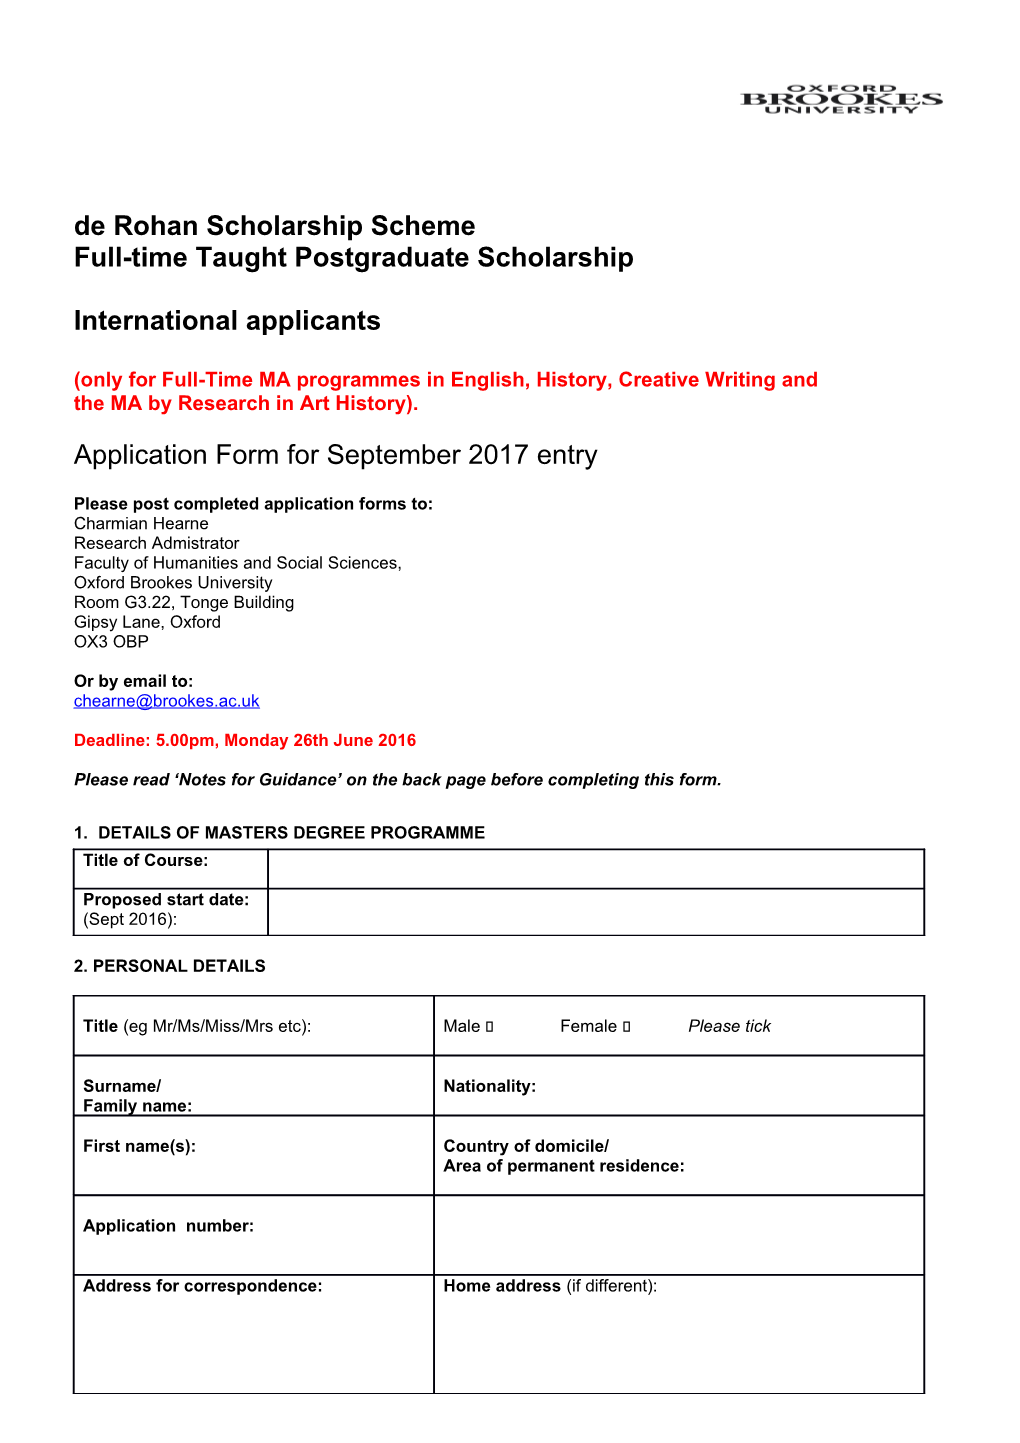 Full-Time Taught Postgraduate Scholarship